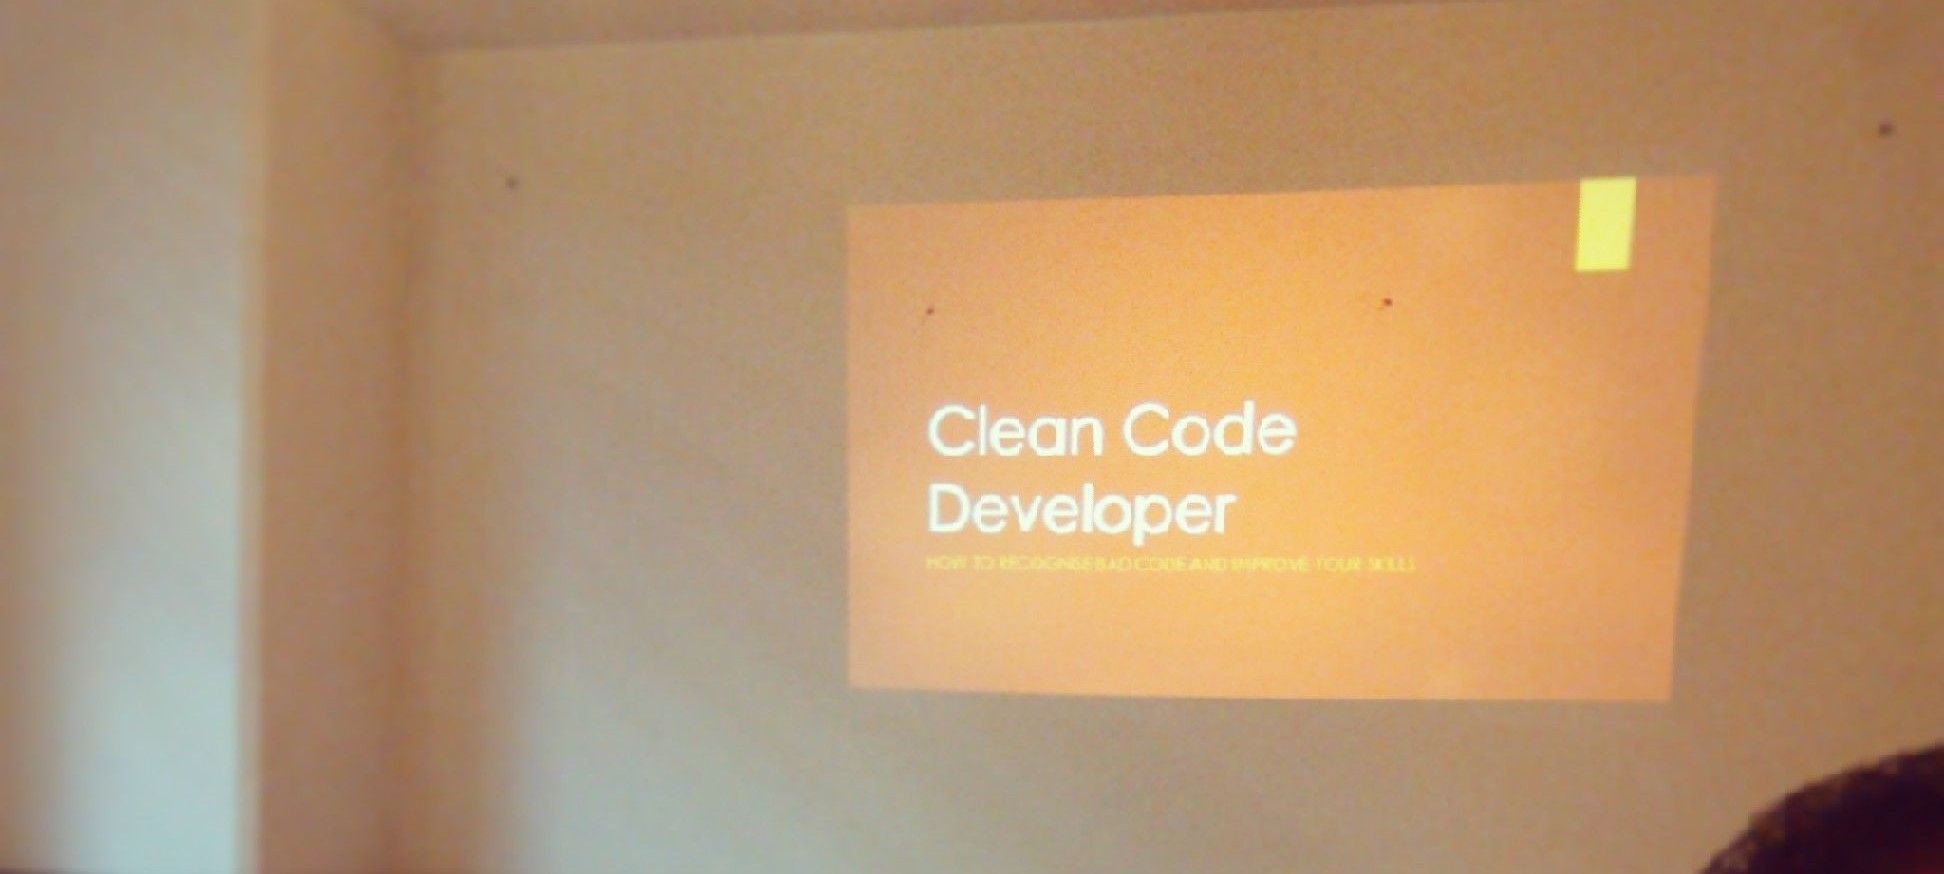 MSCC: Clean Code Development & Flexible work environment